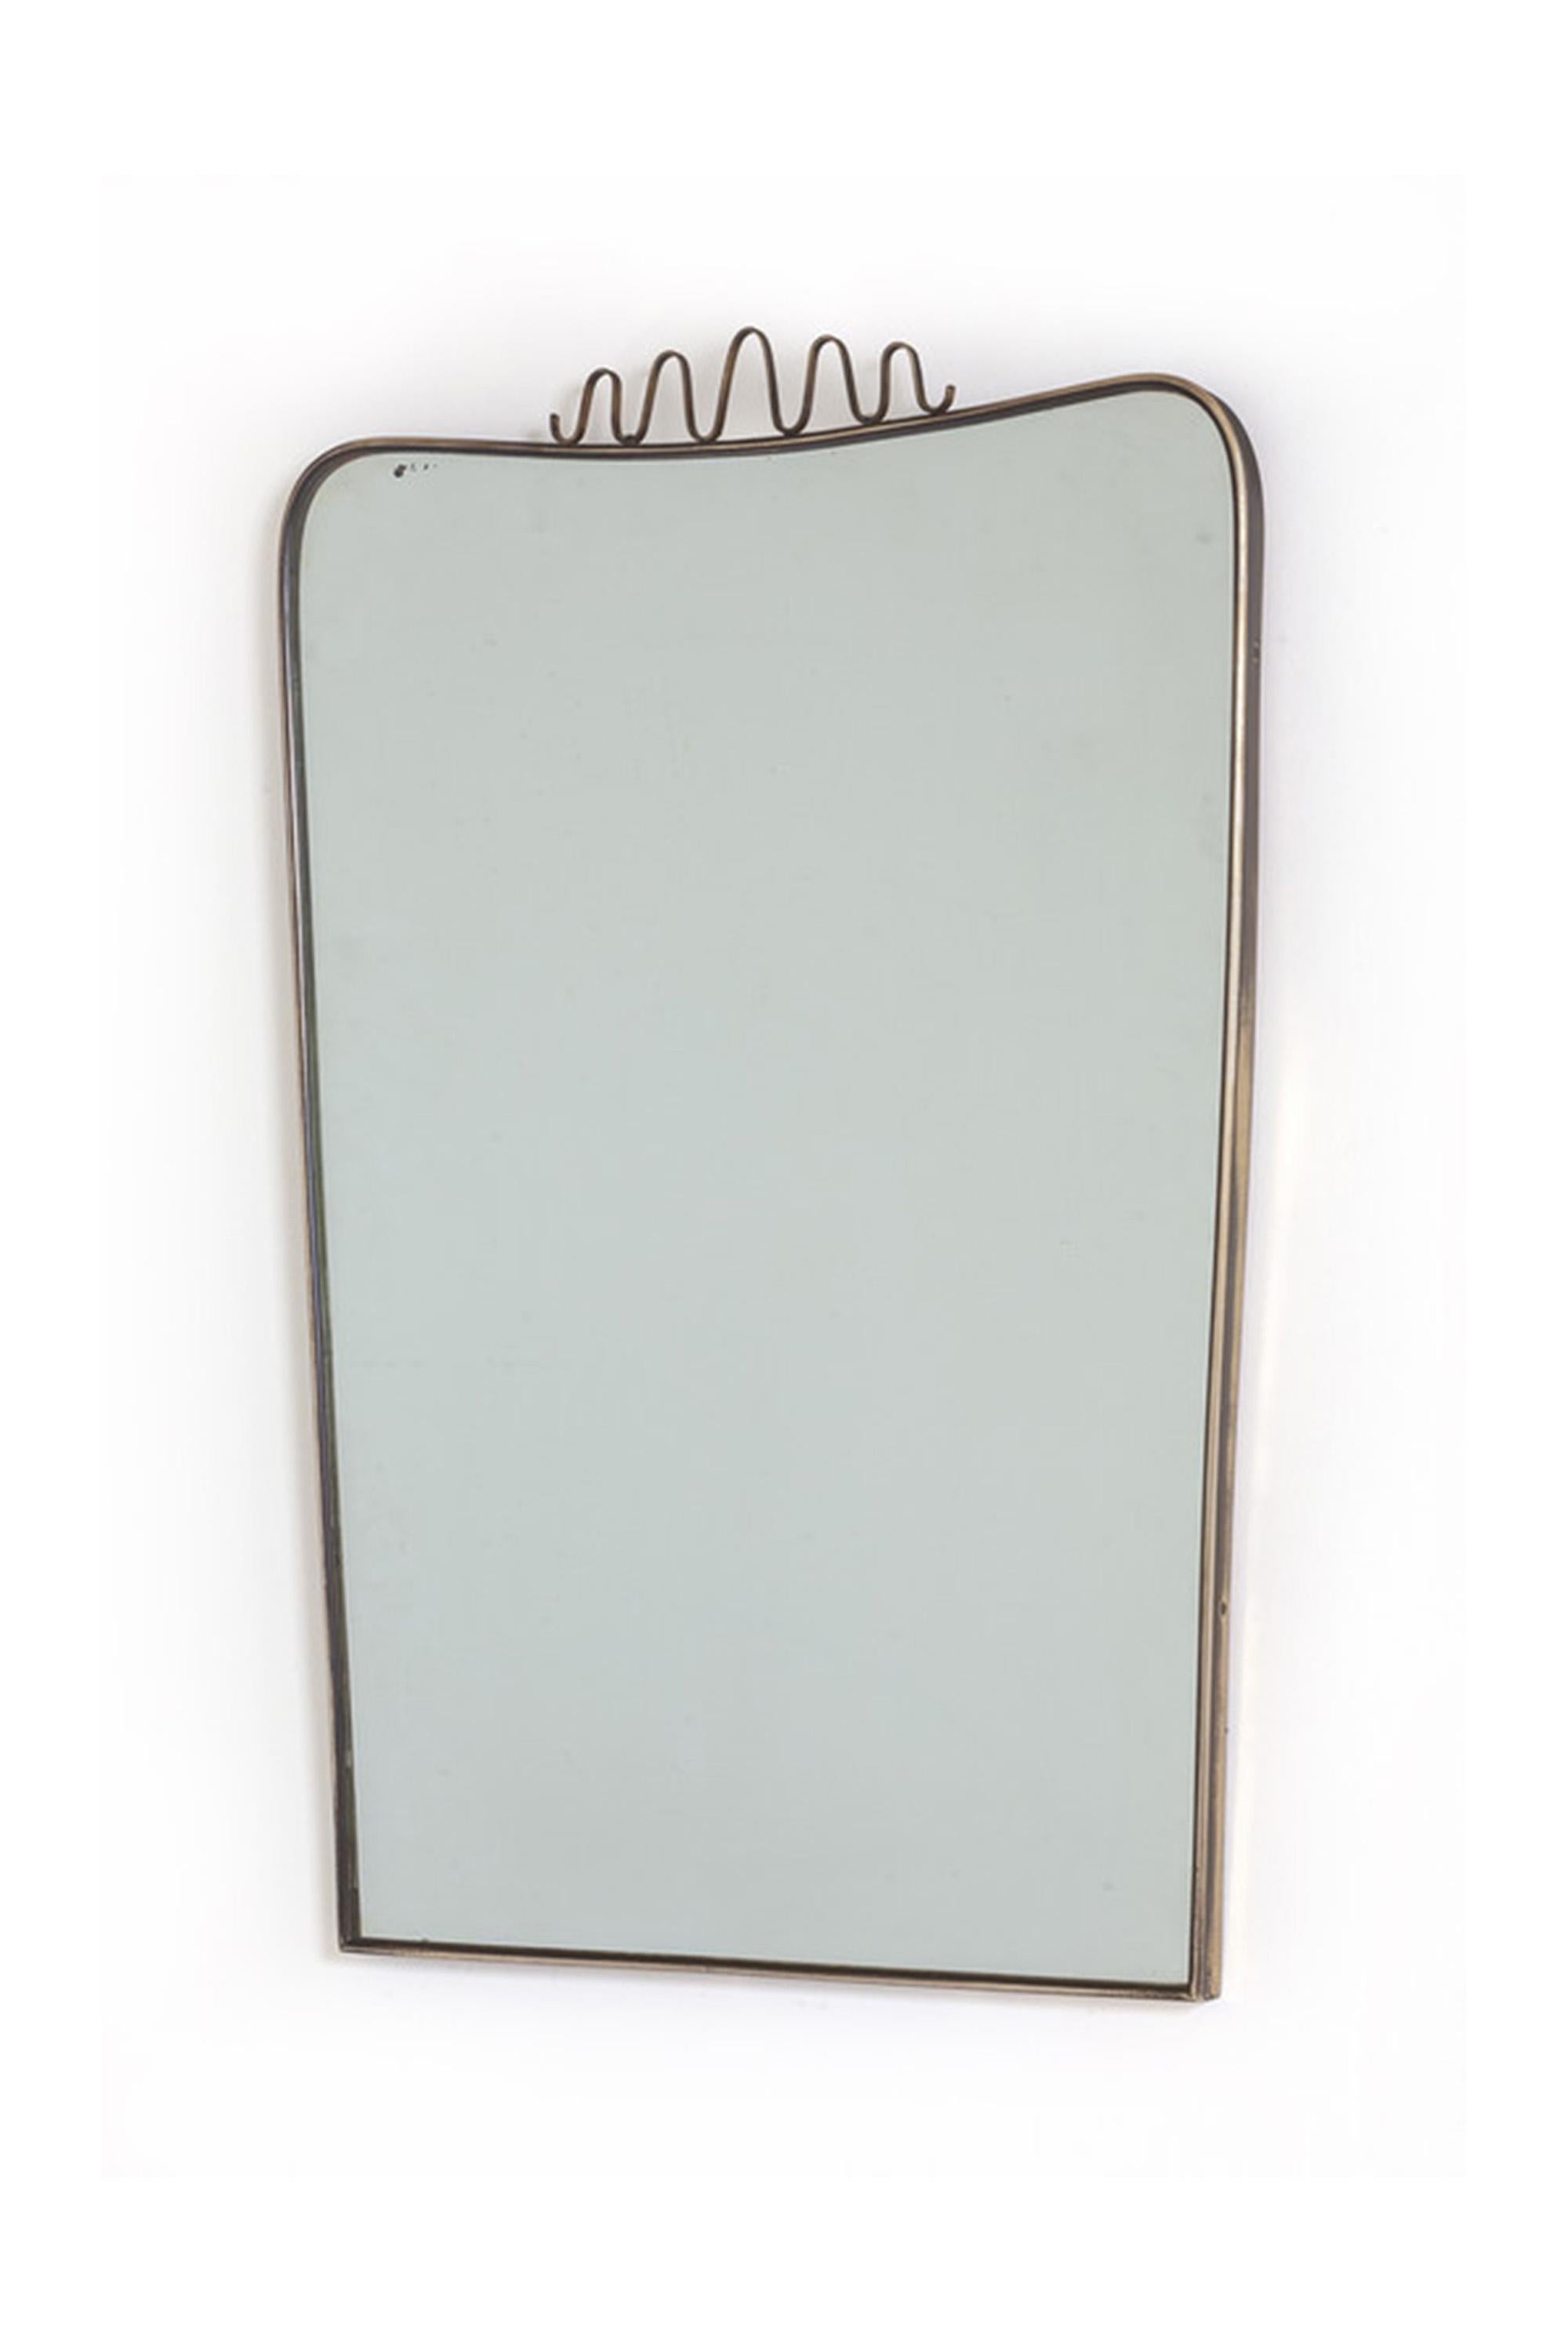 20th Century Italian Brass Mirror in The Style of Gio Ponti, 1950s